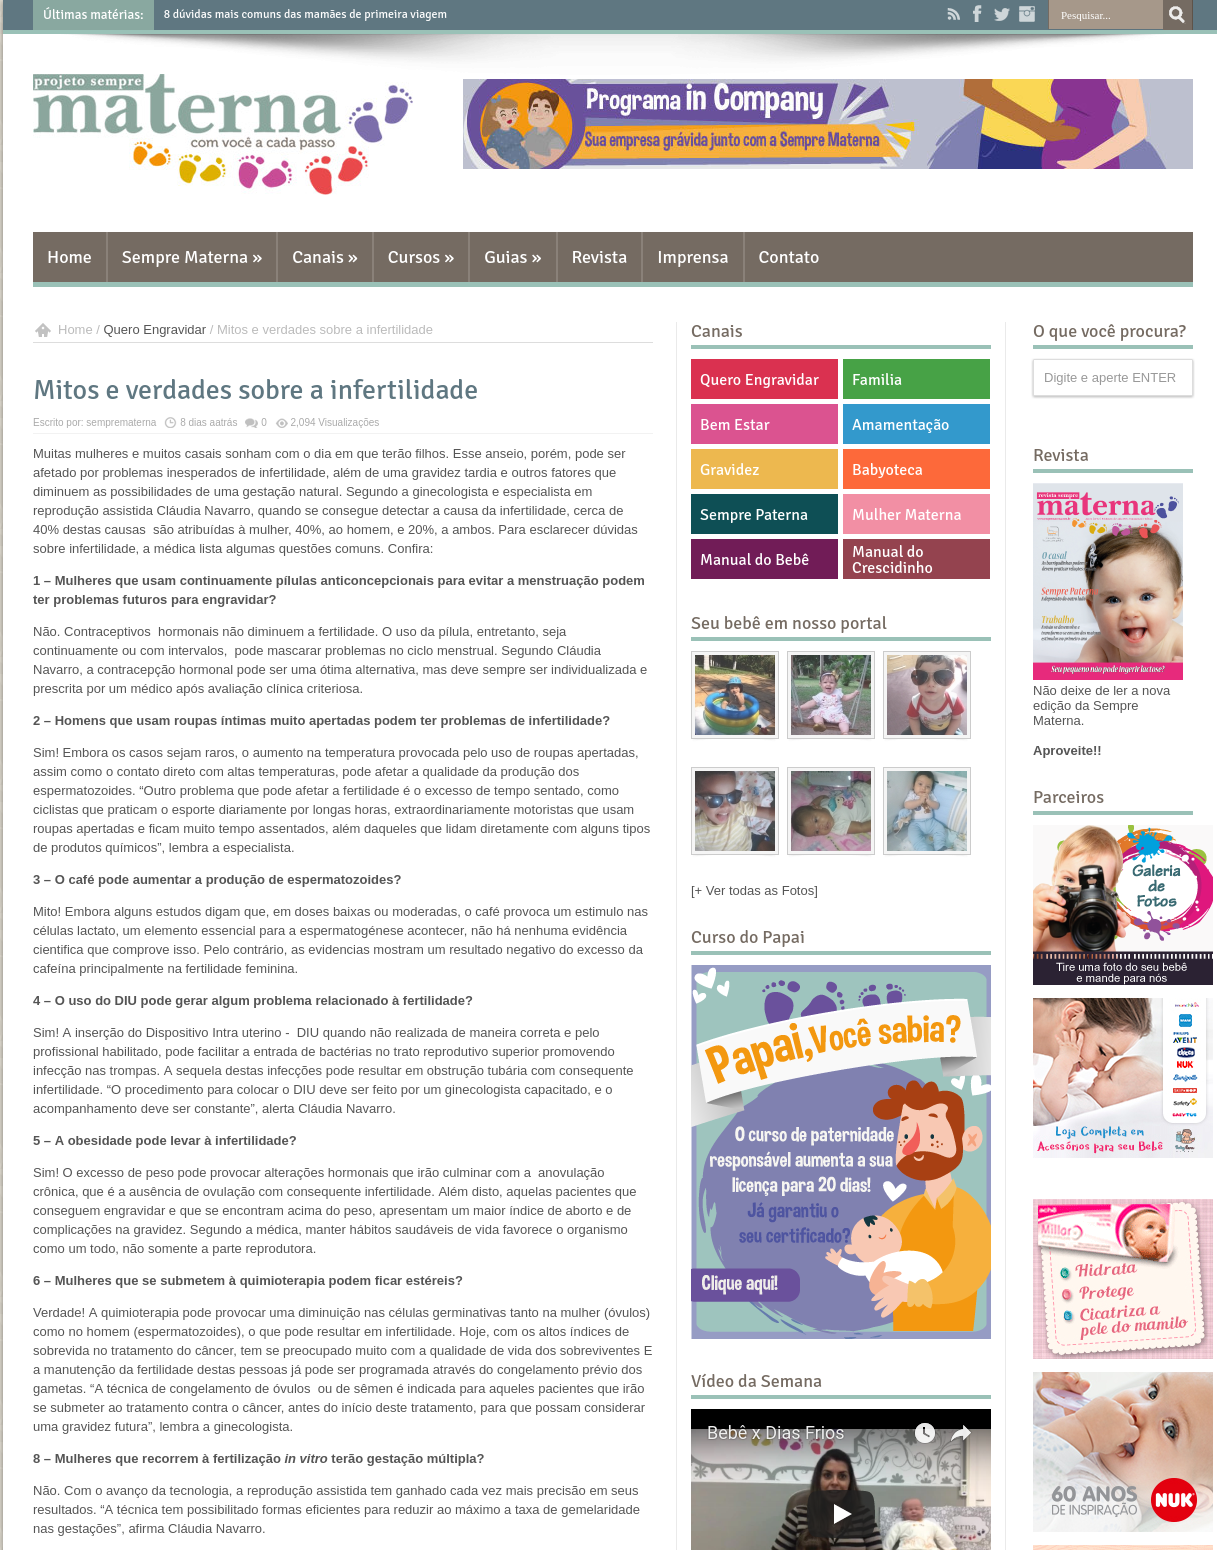 Revista Sempre Materna (site) – Mitos e verdades sobre a infertilidade